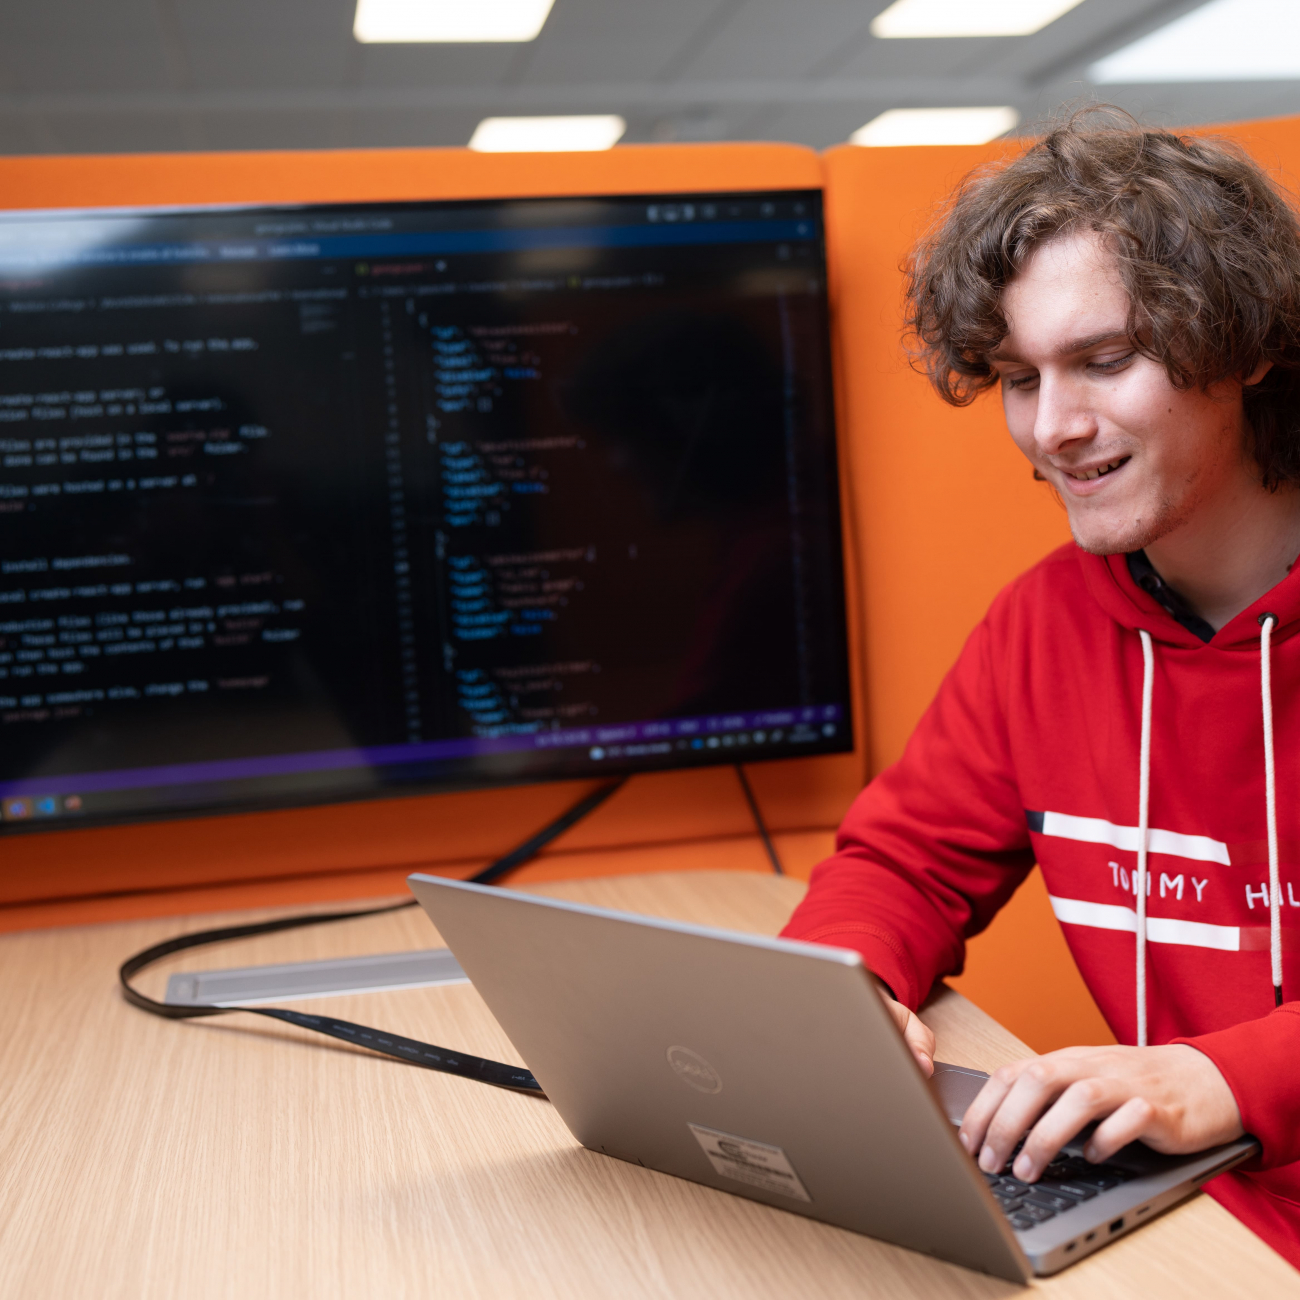 university student working on coding on laptop